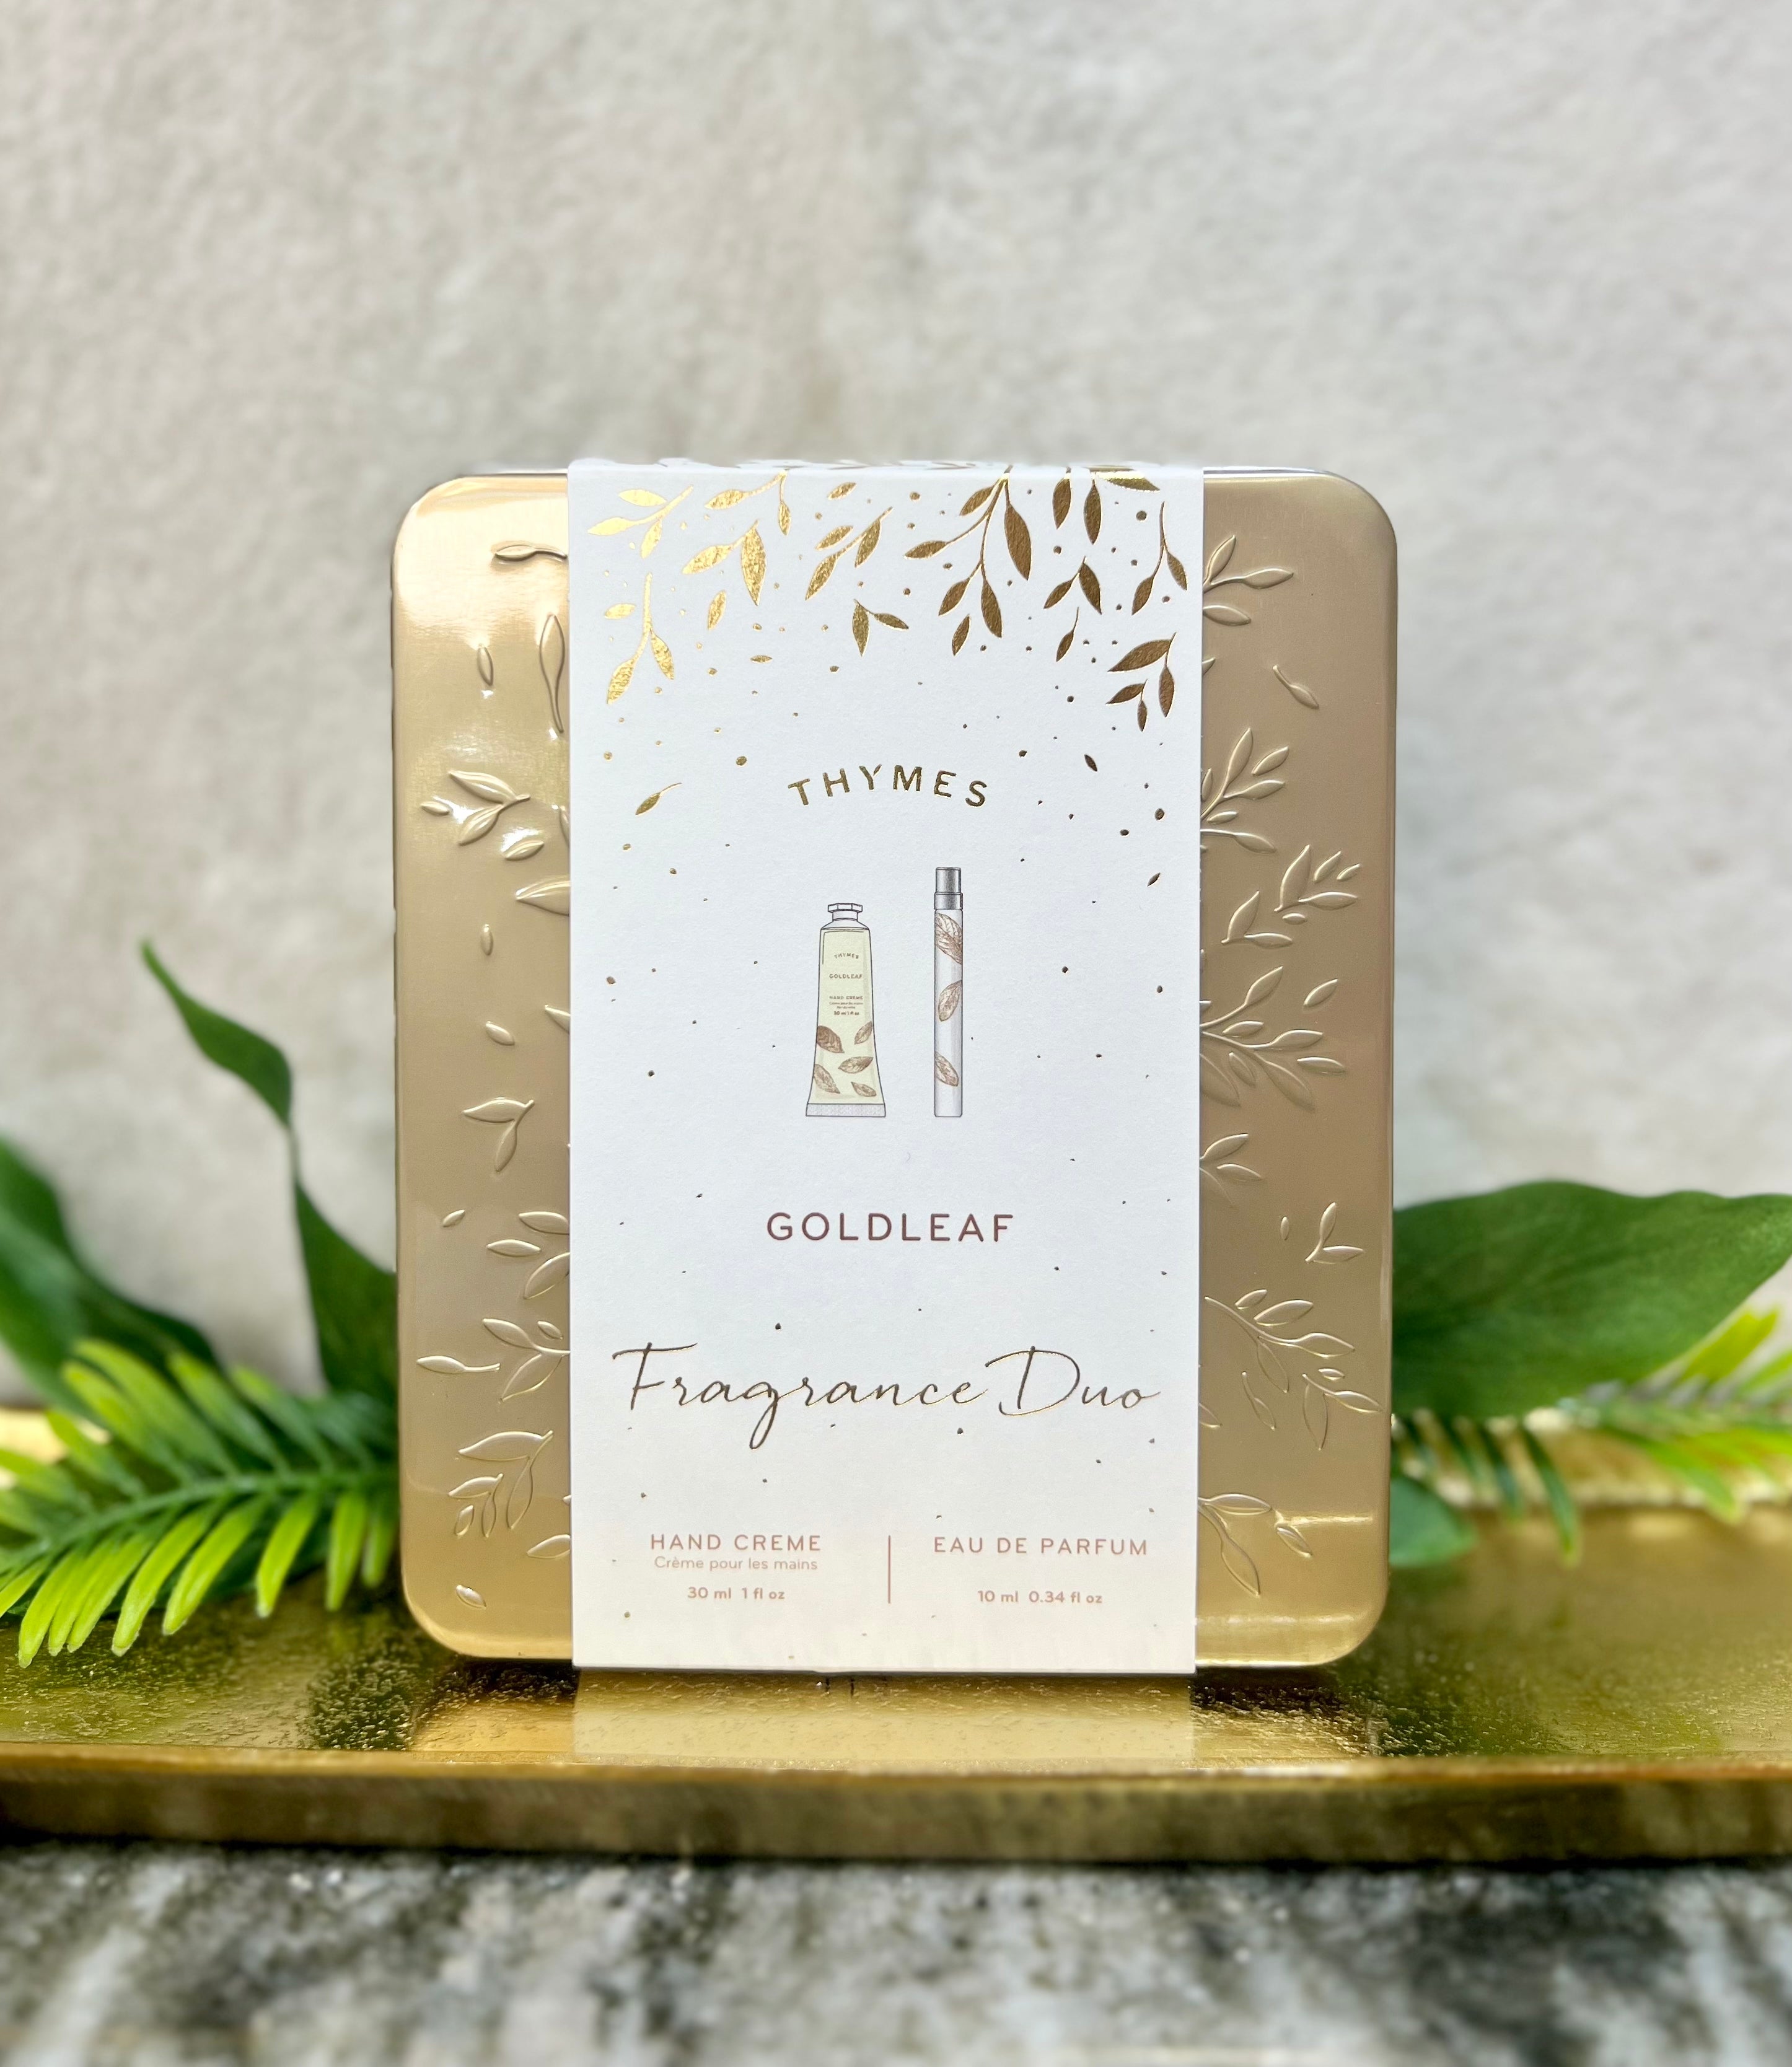 Thymes “Goldleaf” Fragrance Duo